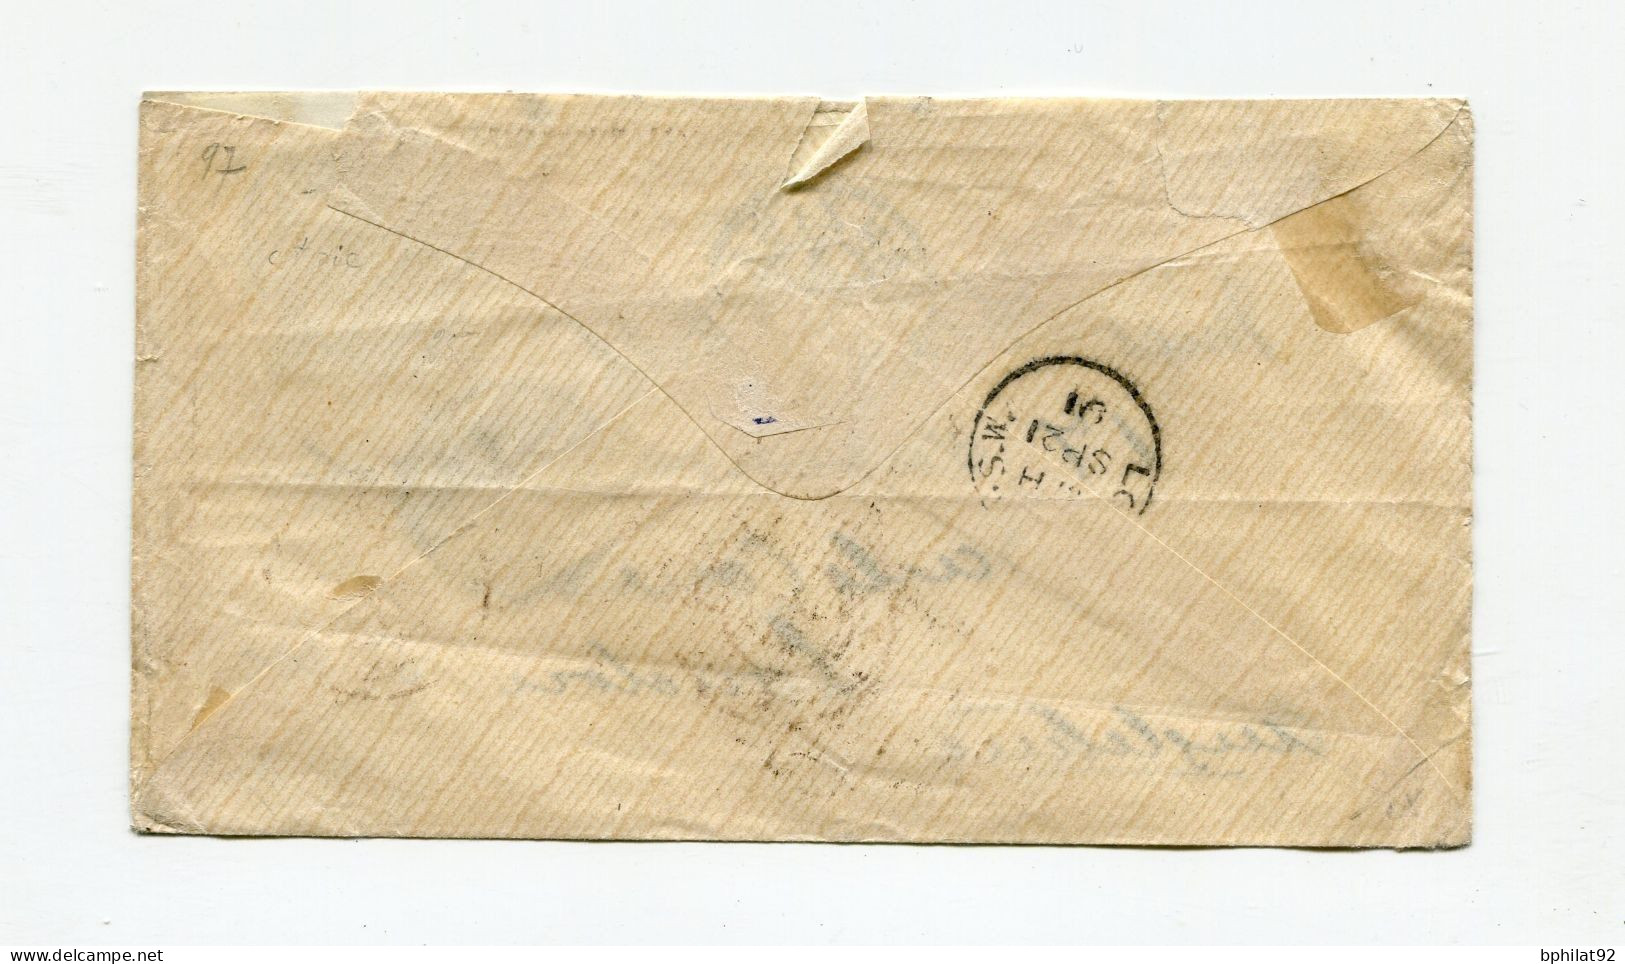 !!! LETTRE DE ZANZIBAR DE 1891 POUR LONDRES - Cartas & Documentos